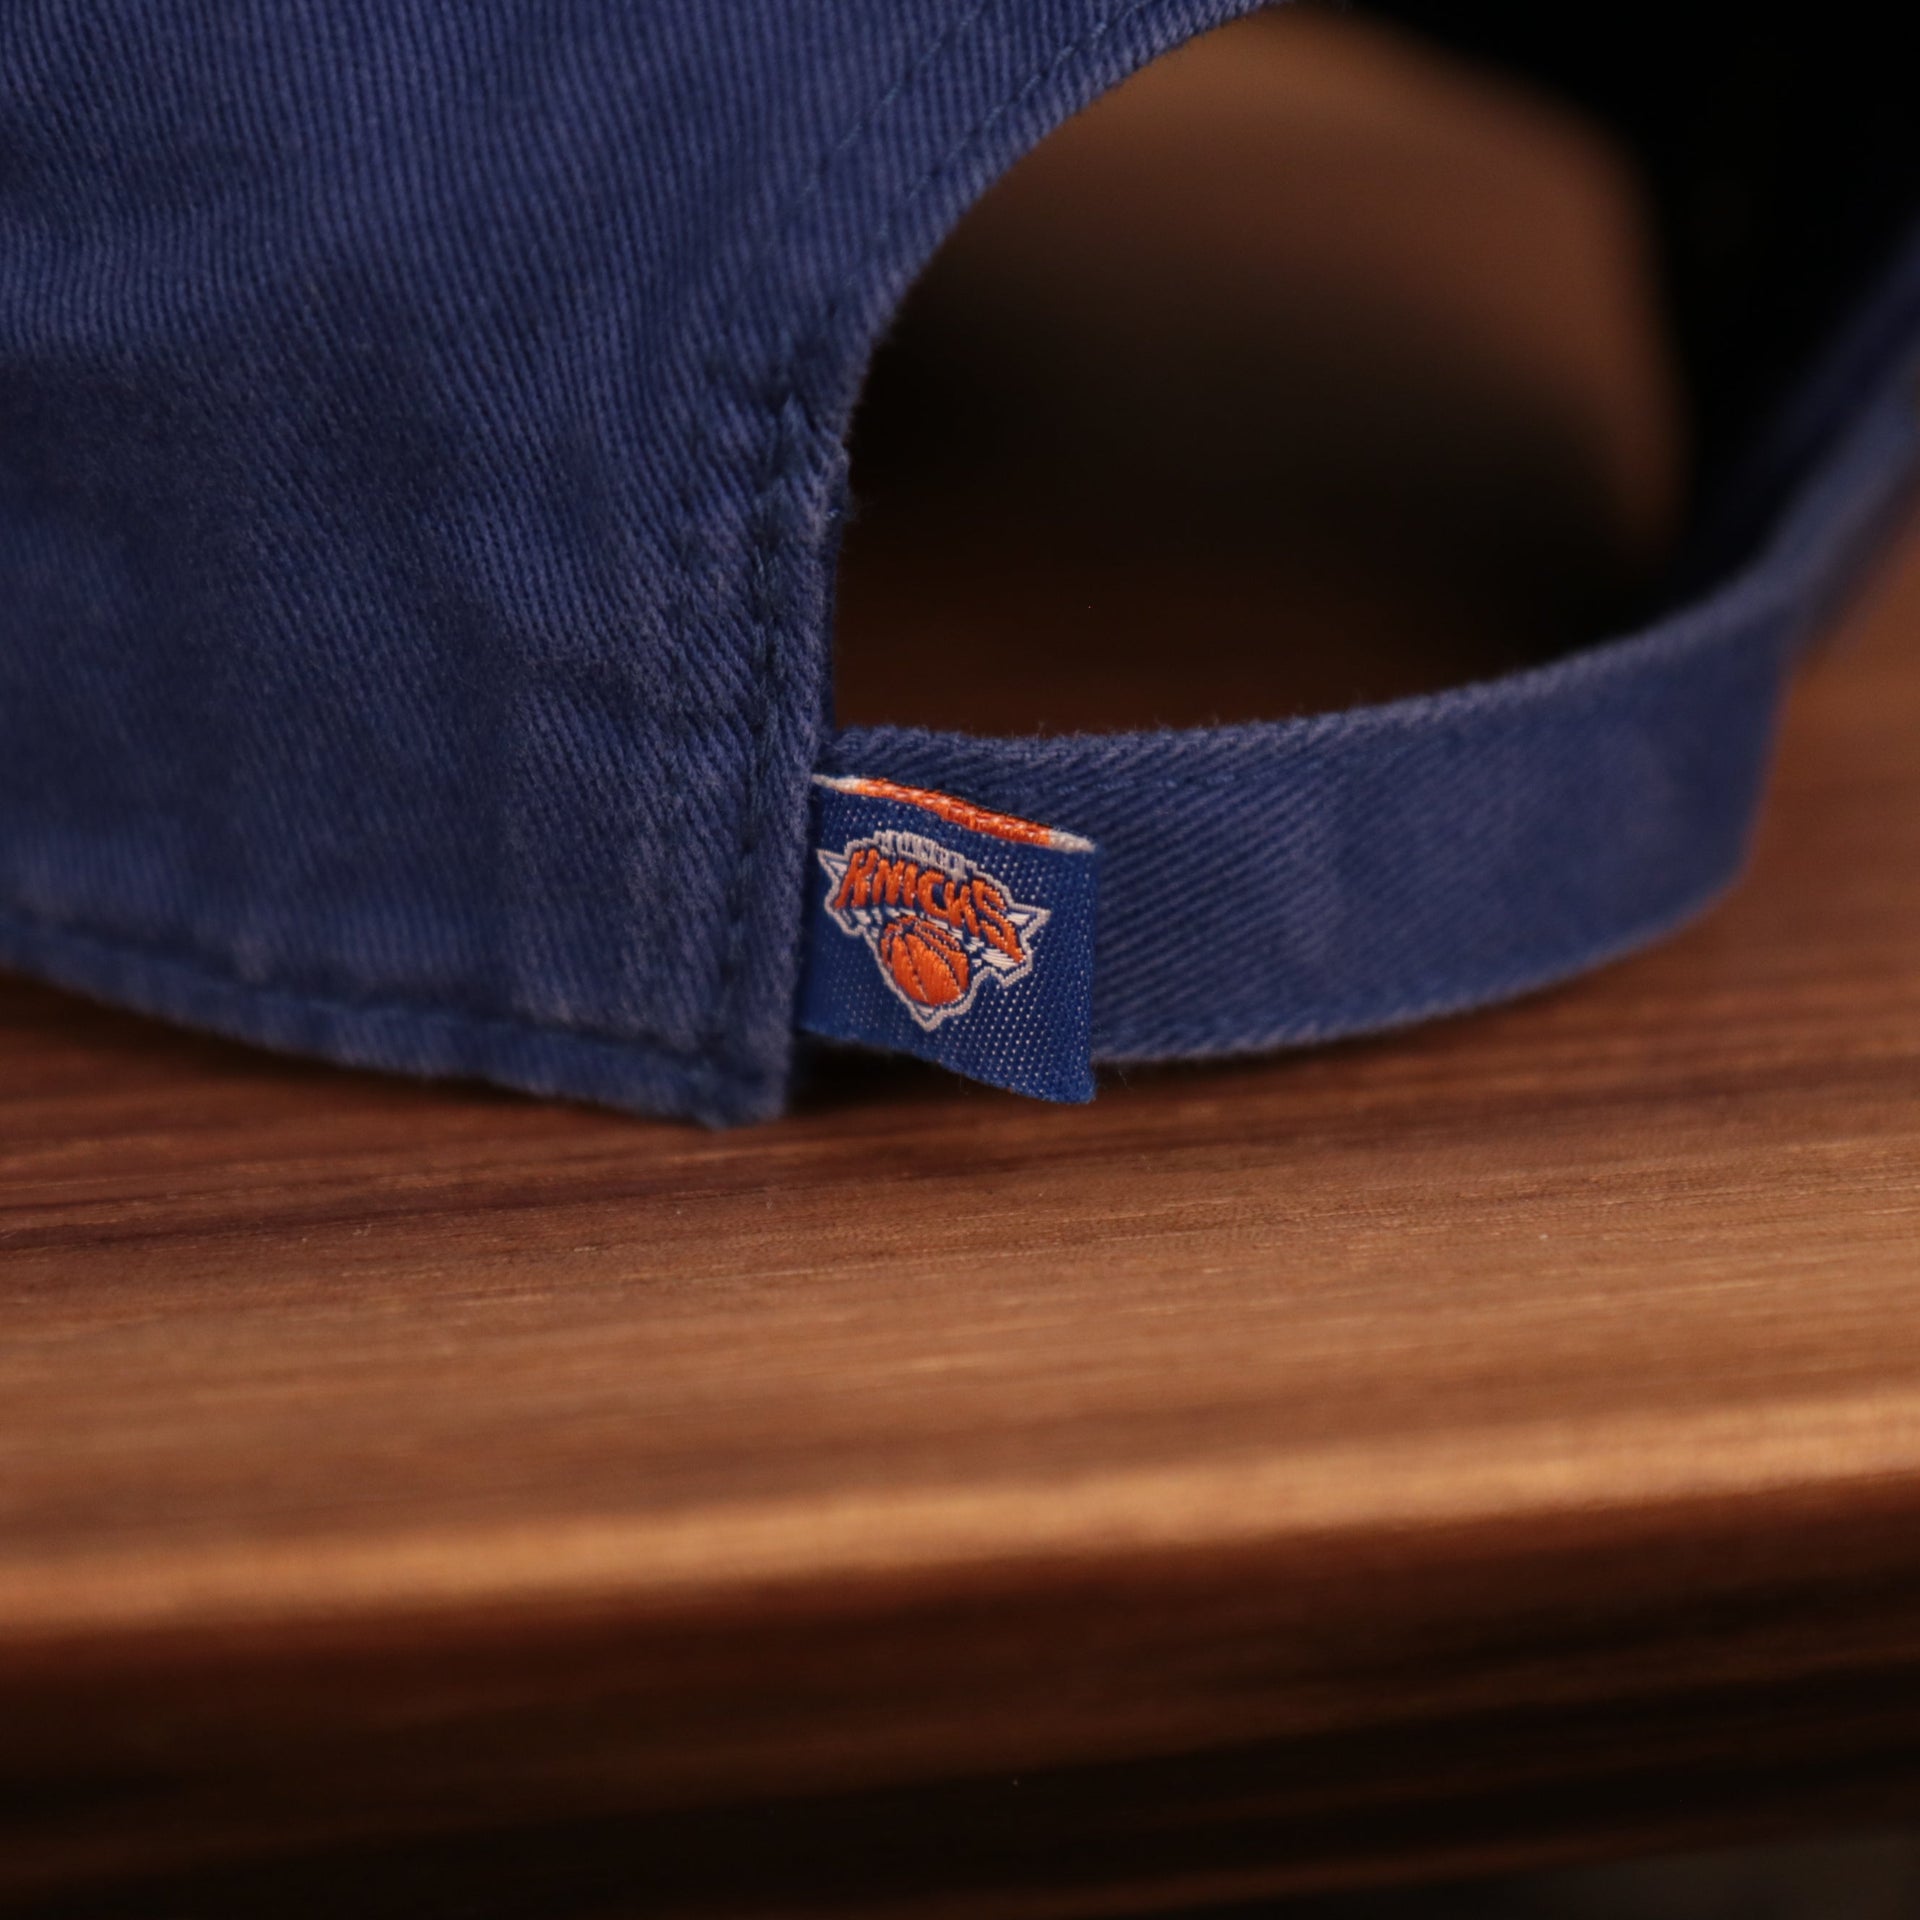 knicks logo tag New York Knicks Royal Blue Adjustable Dad Hat